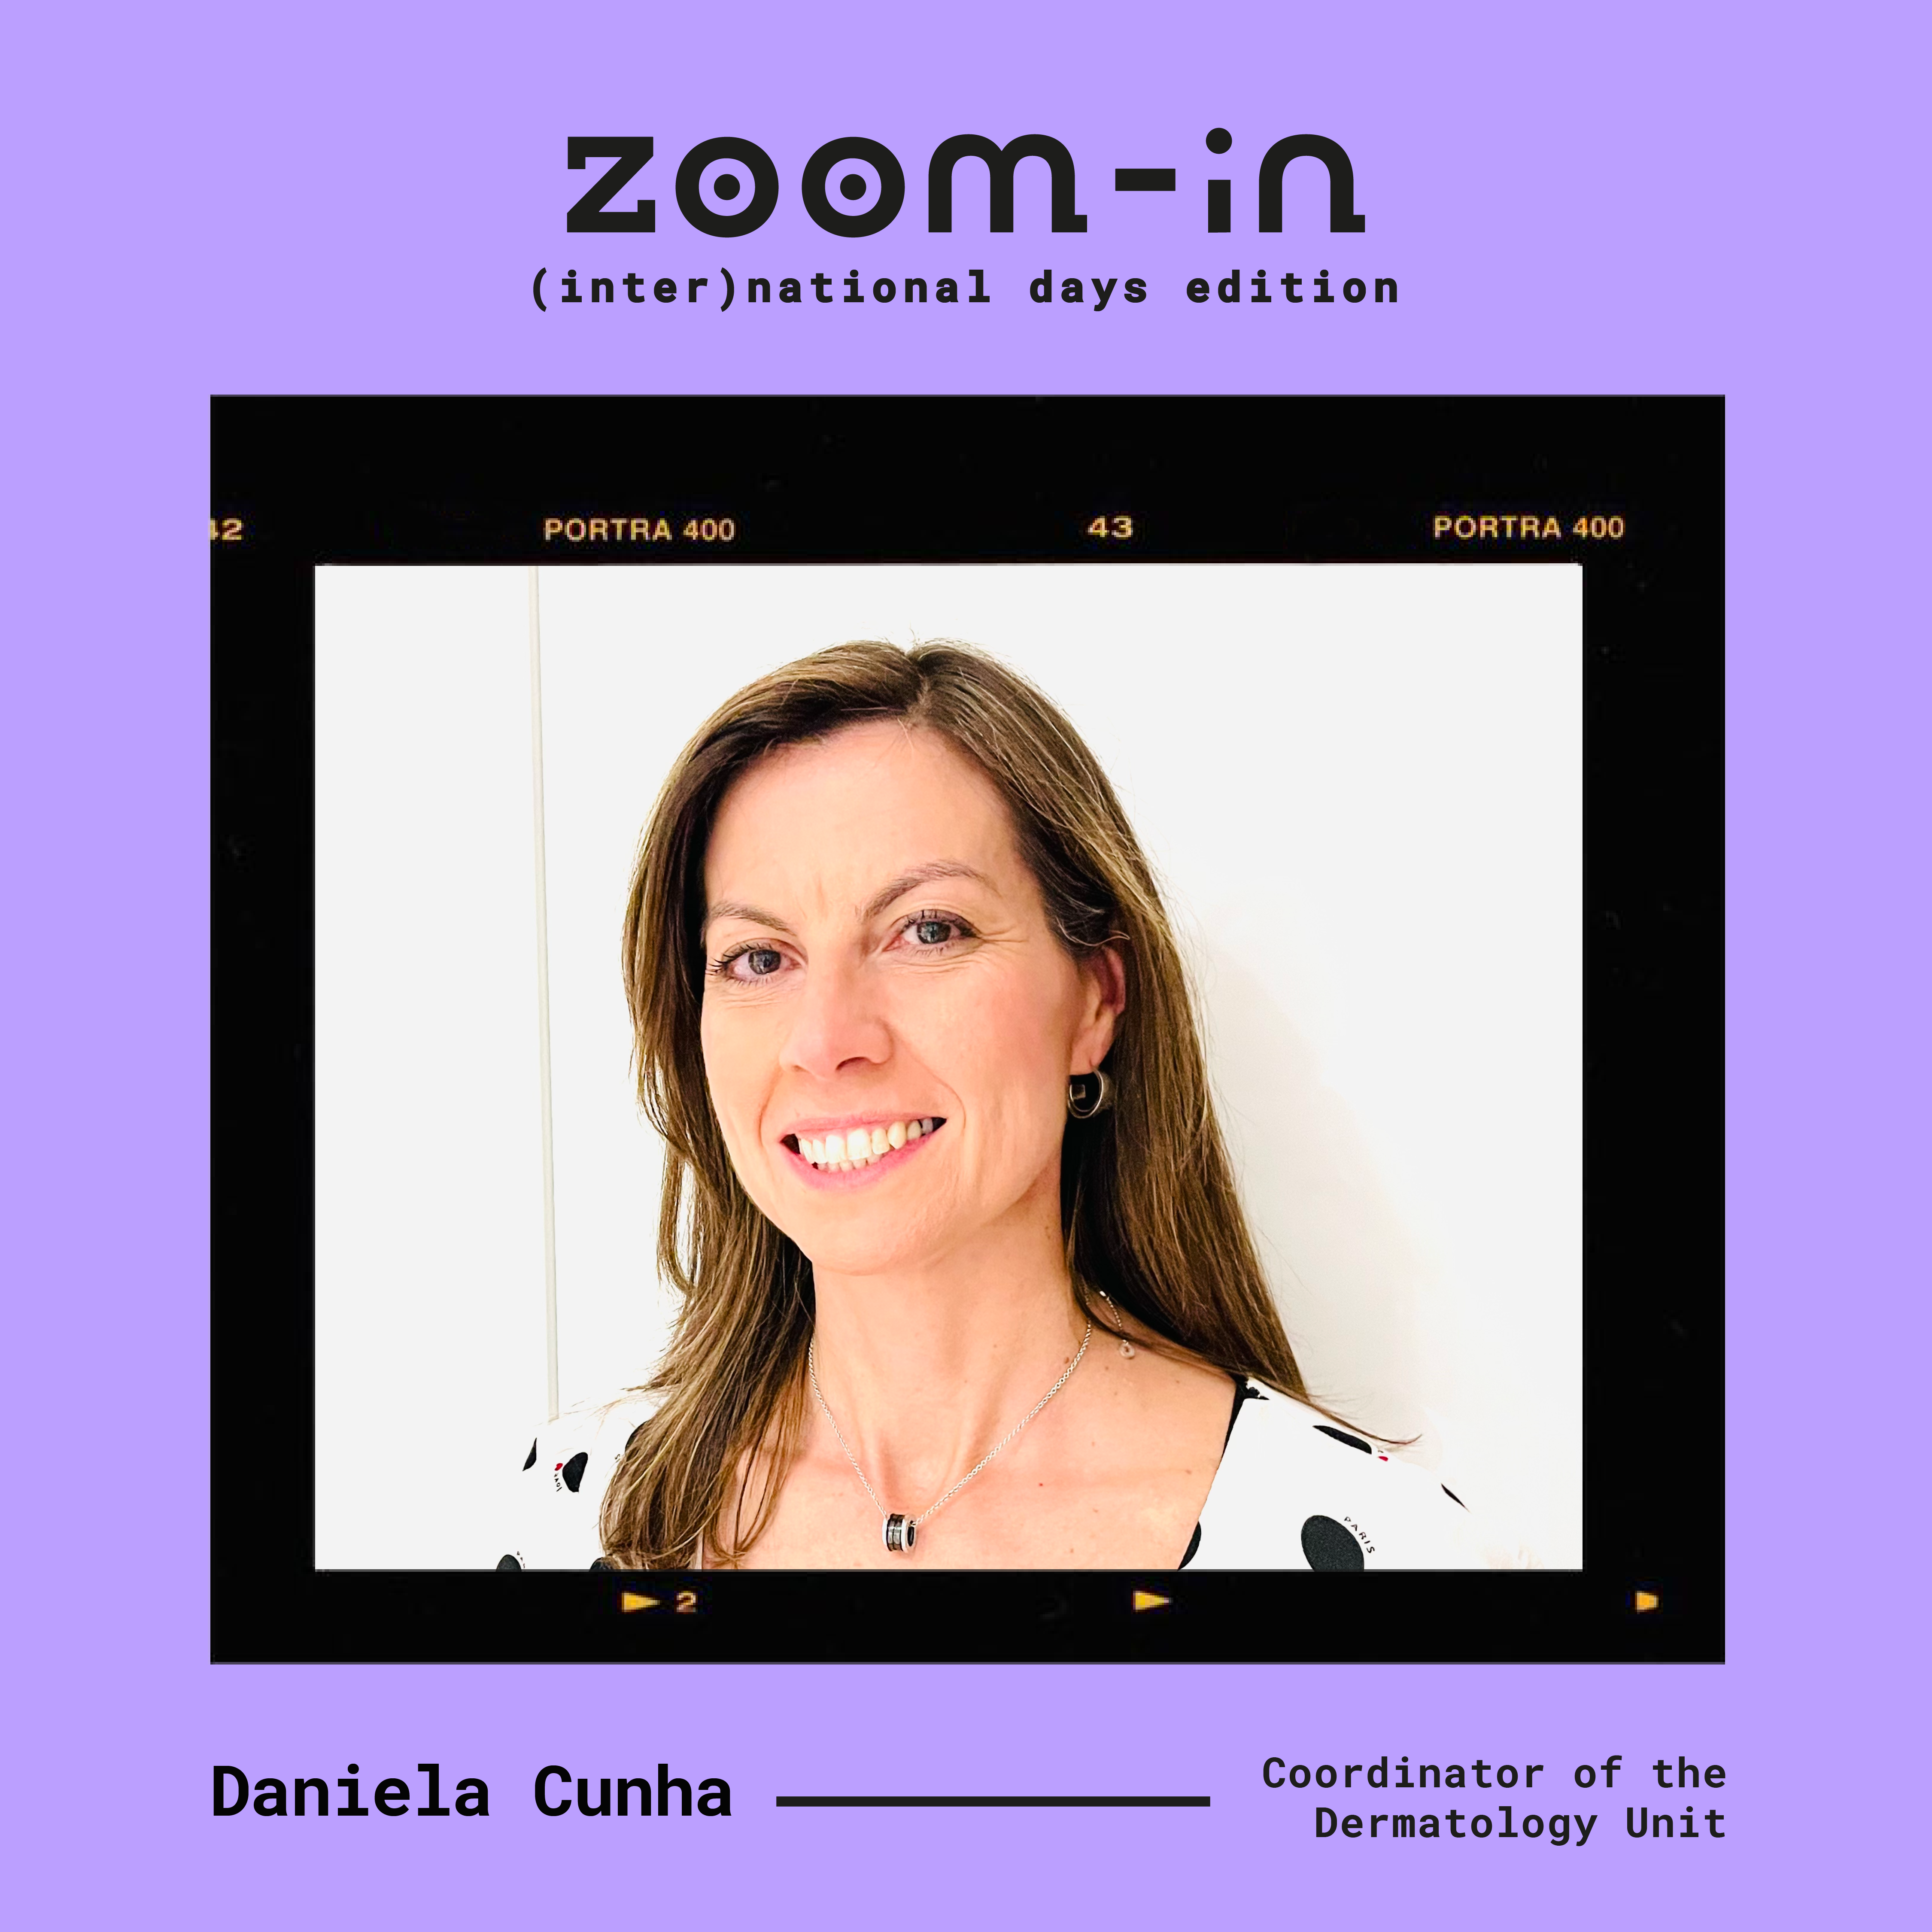 Zoom-In on Champalimaud - 3rd Edition - Daniela Cunha on European Melanoma Day